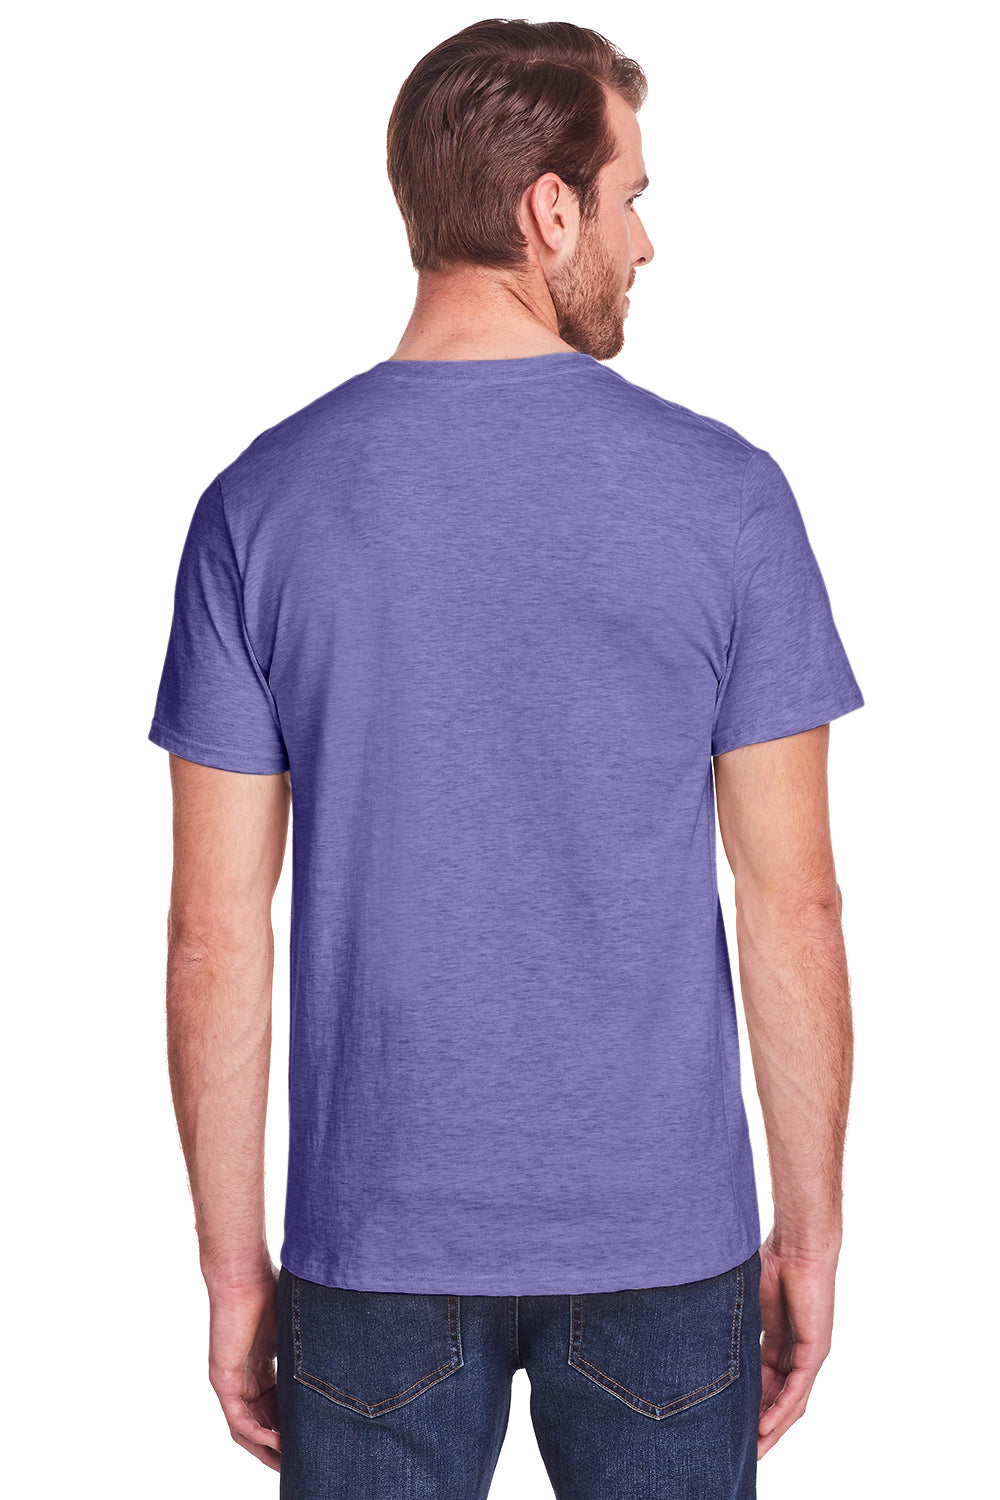 Fruit Of The Loom IC47MR Mens Iconic Short Sleeve Crewneck T-Shirt Heather Purple Back